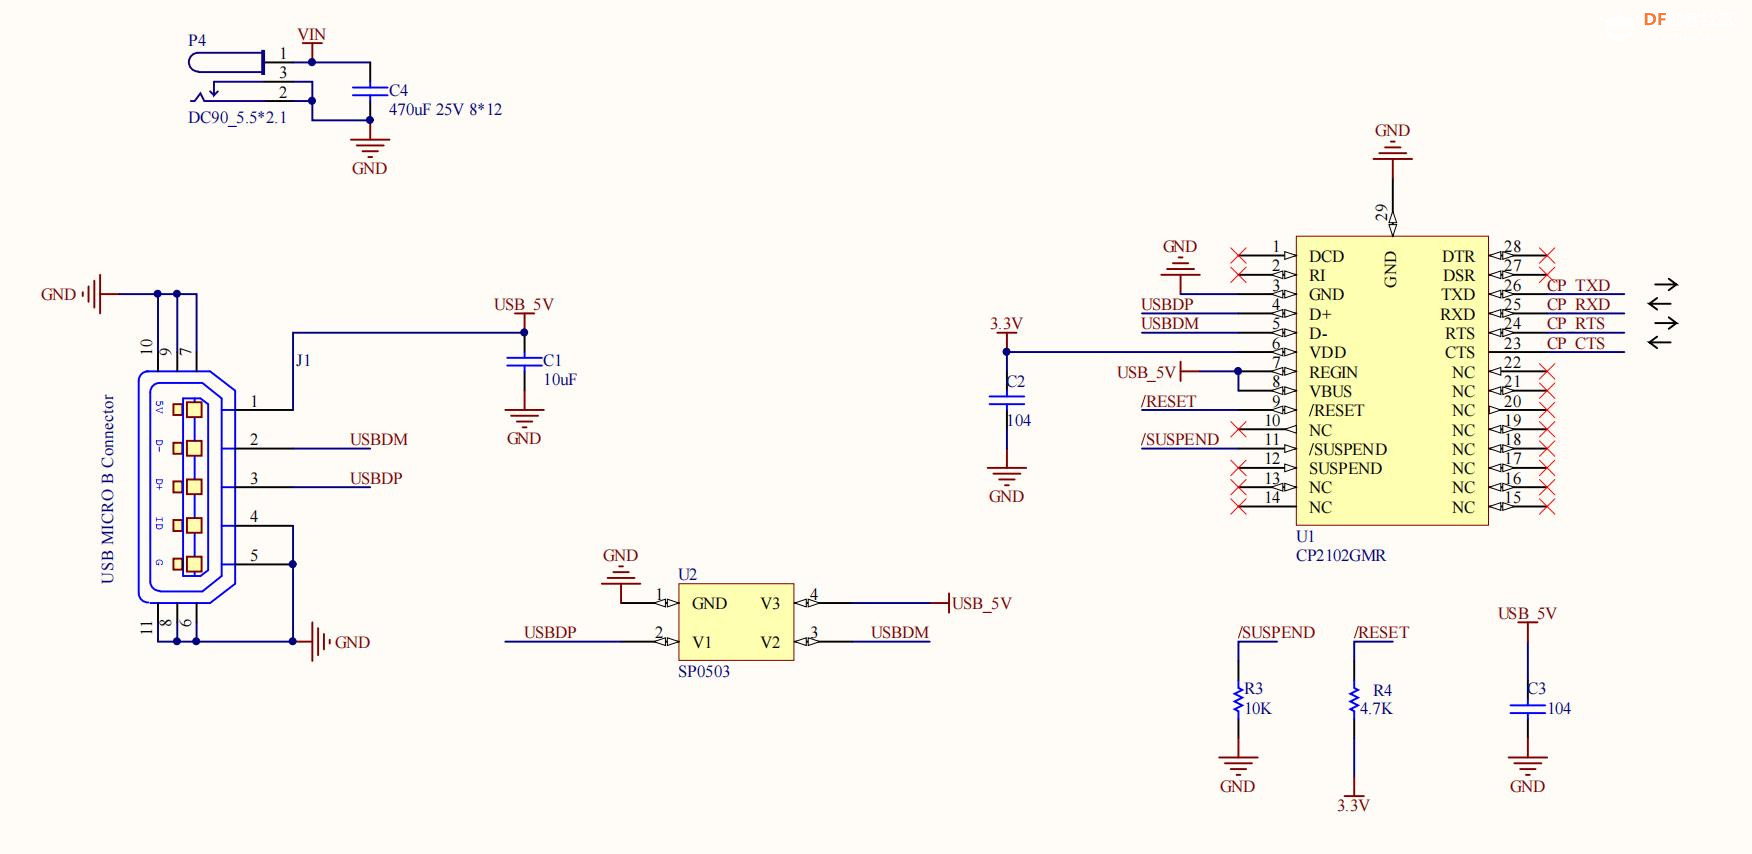 【Arduino】168种传感器系列实验（203）---Air724UG Cat14G模块图2